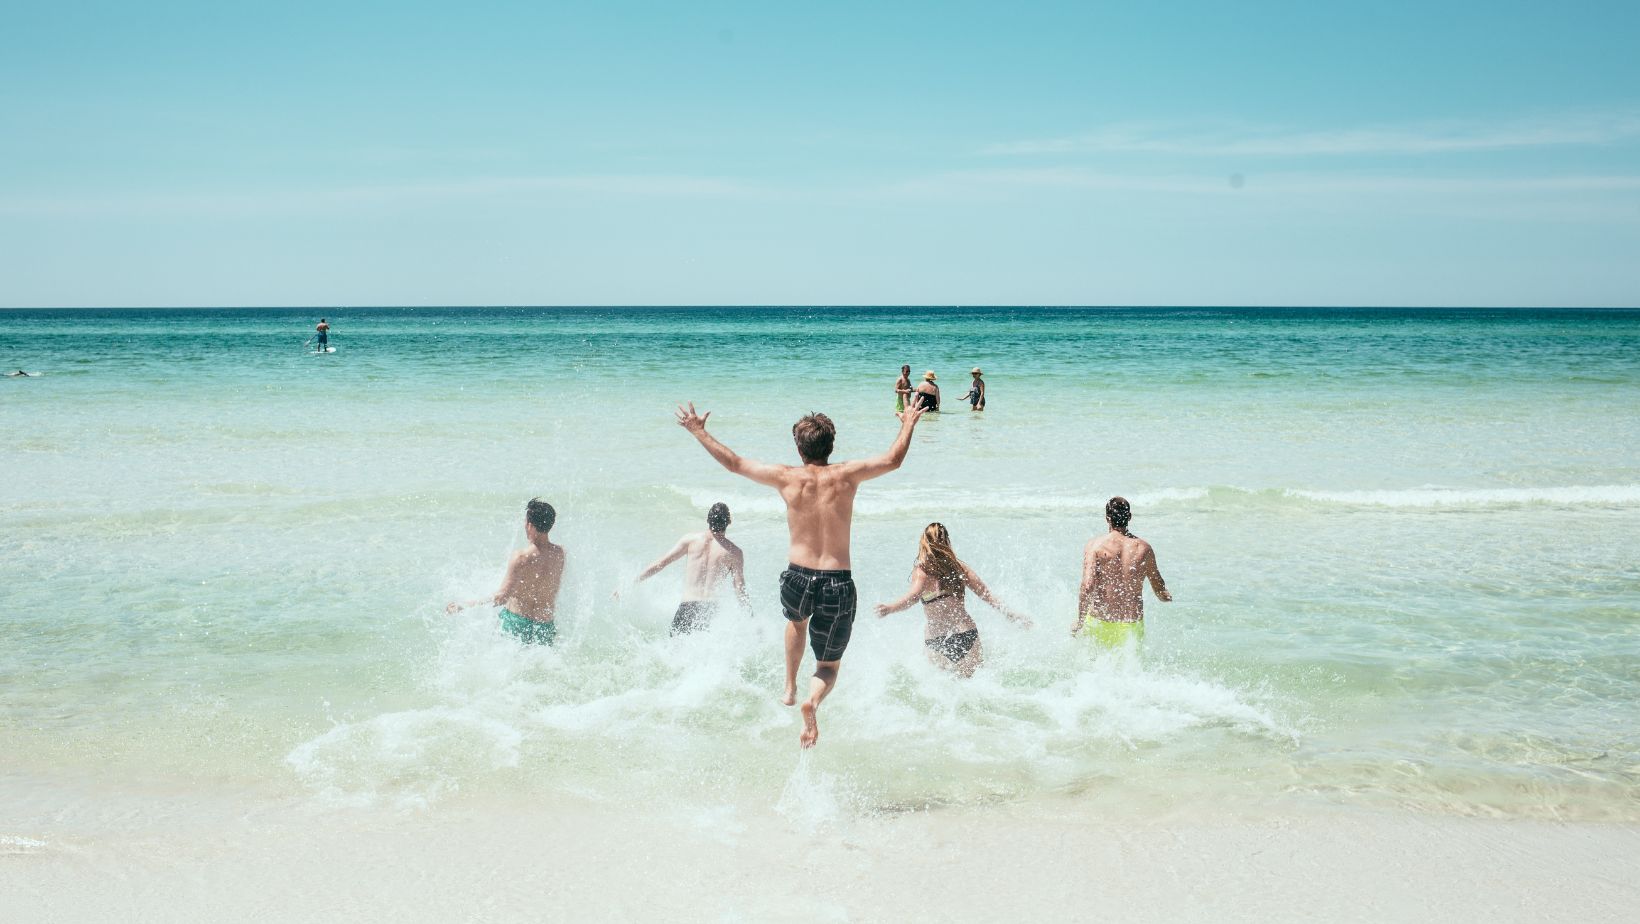 five friends enjoying a beach day in the ocean